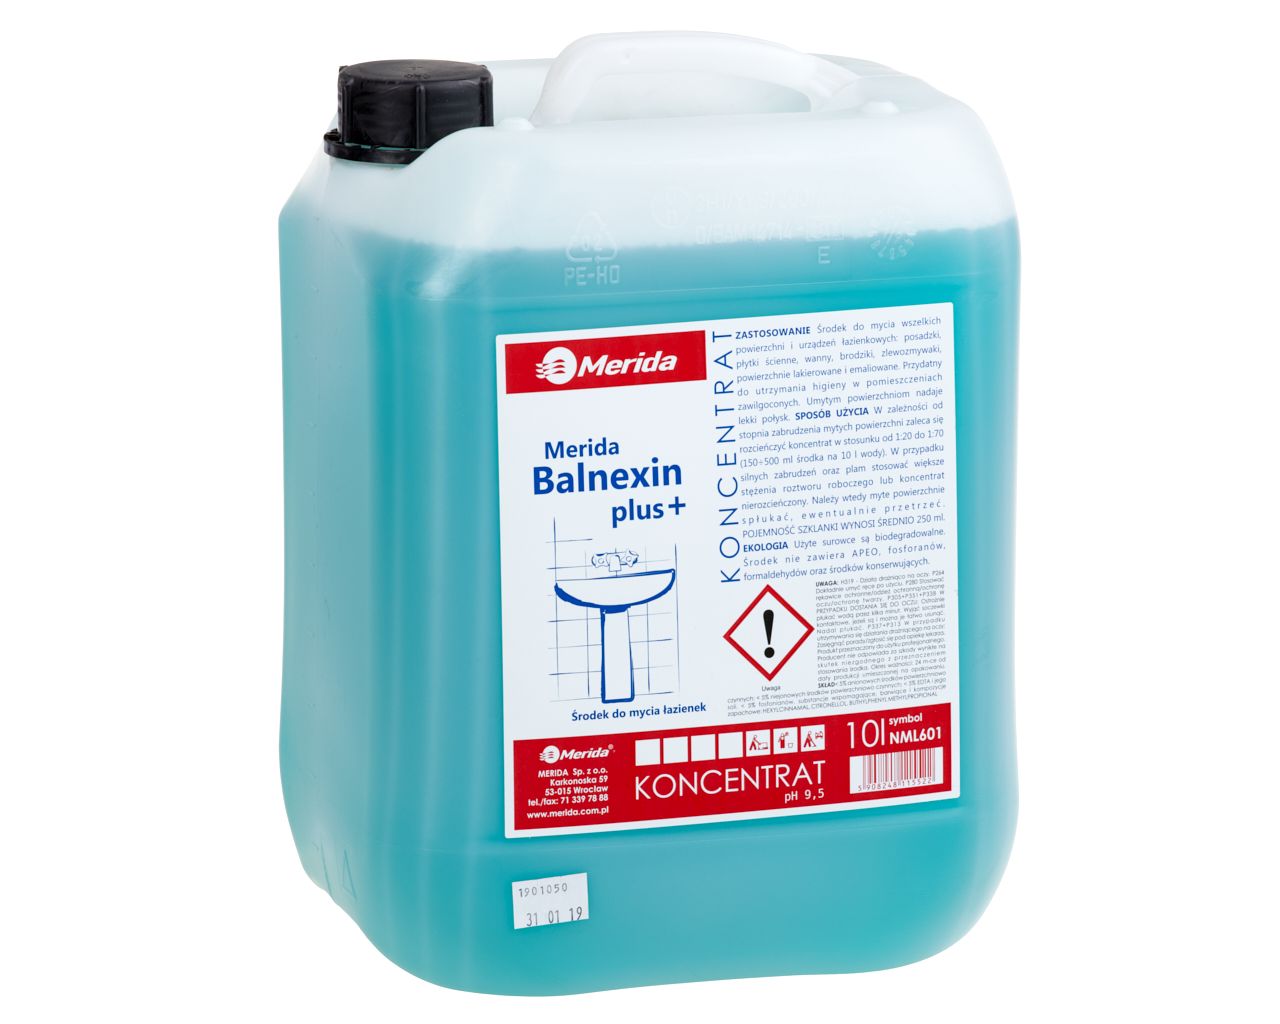 MERIDA BALNEXIN PLUS (MK100) - alkaline cleaner for daily bathrooms care 10 l